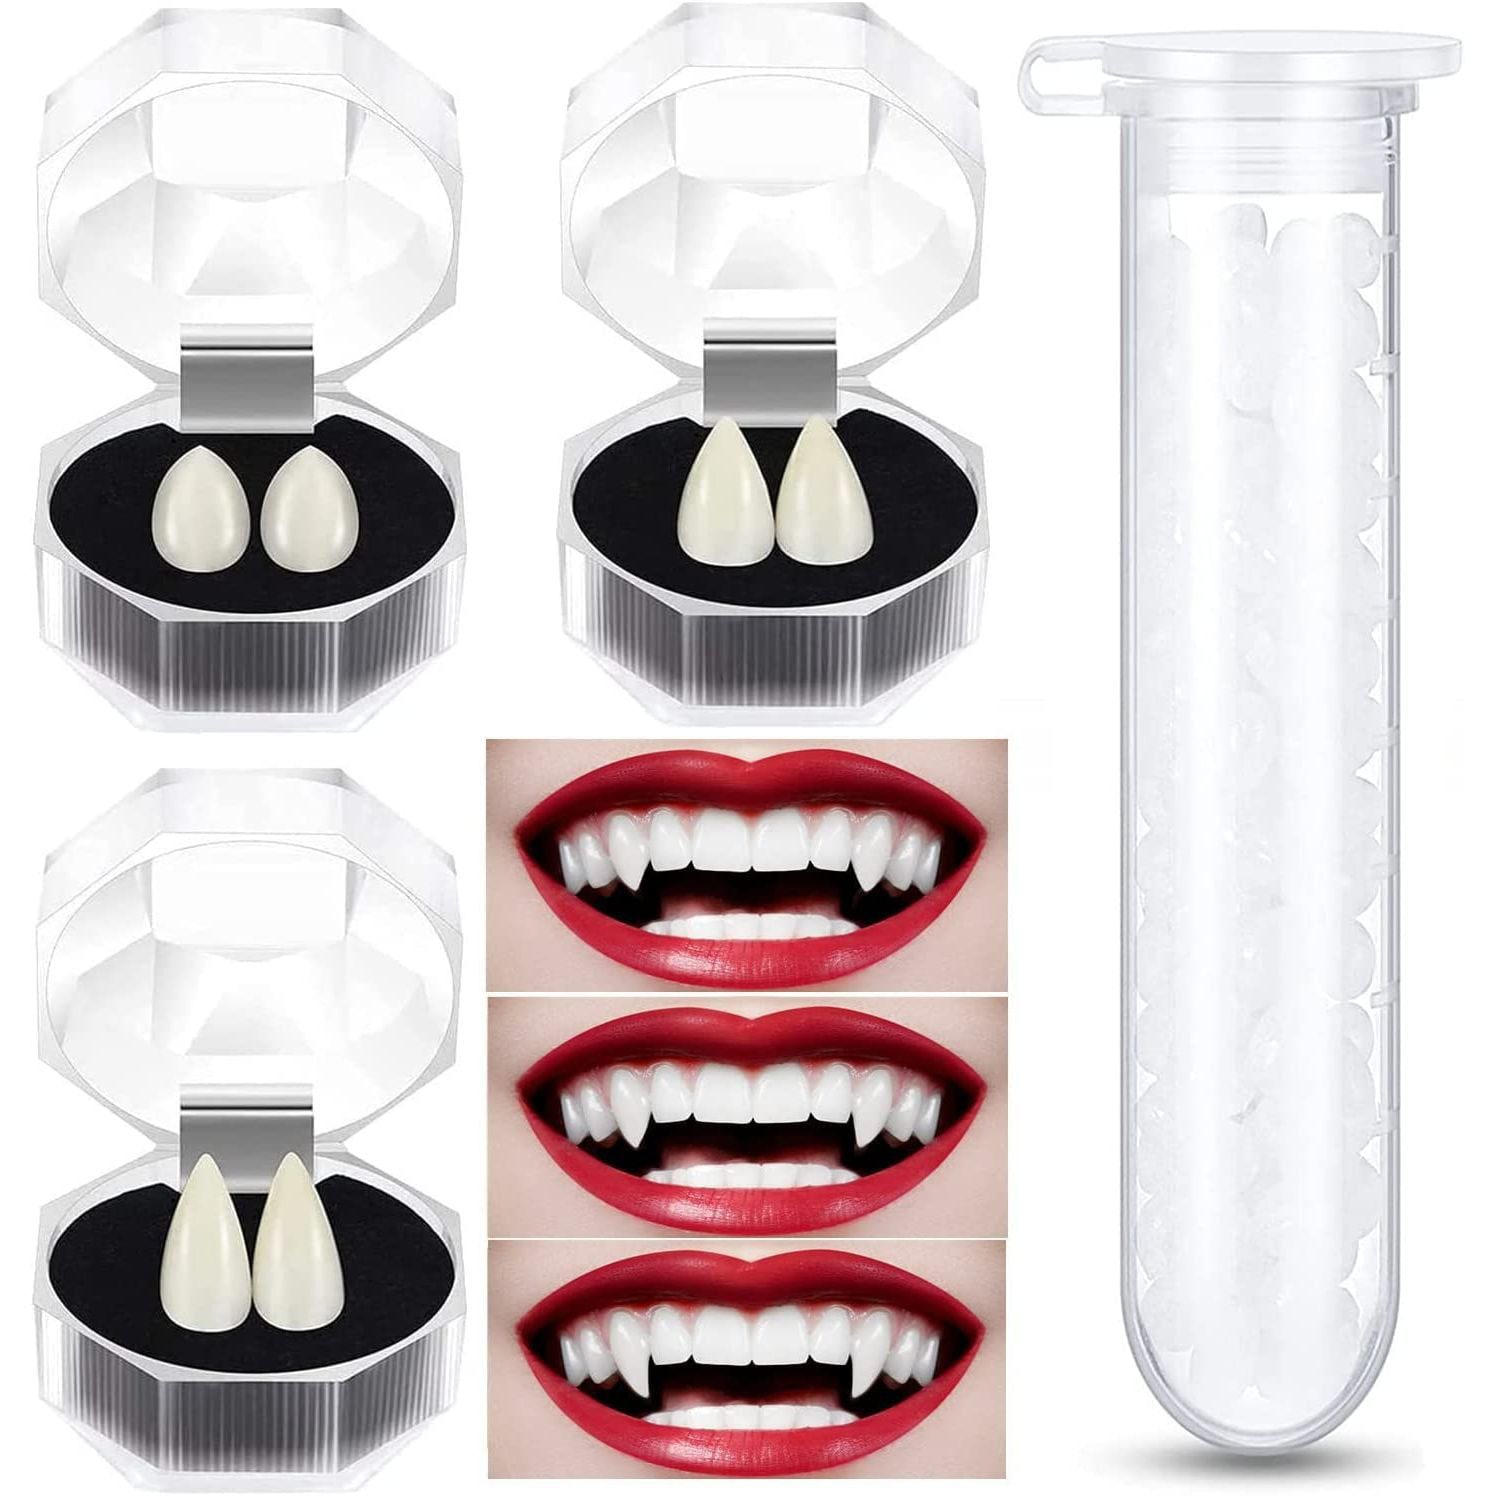 Shop GENERIC Qa 3 Sizes Vampire Fangs Dentures with 1 Tube Teeth ...